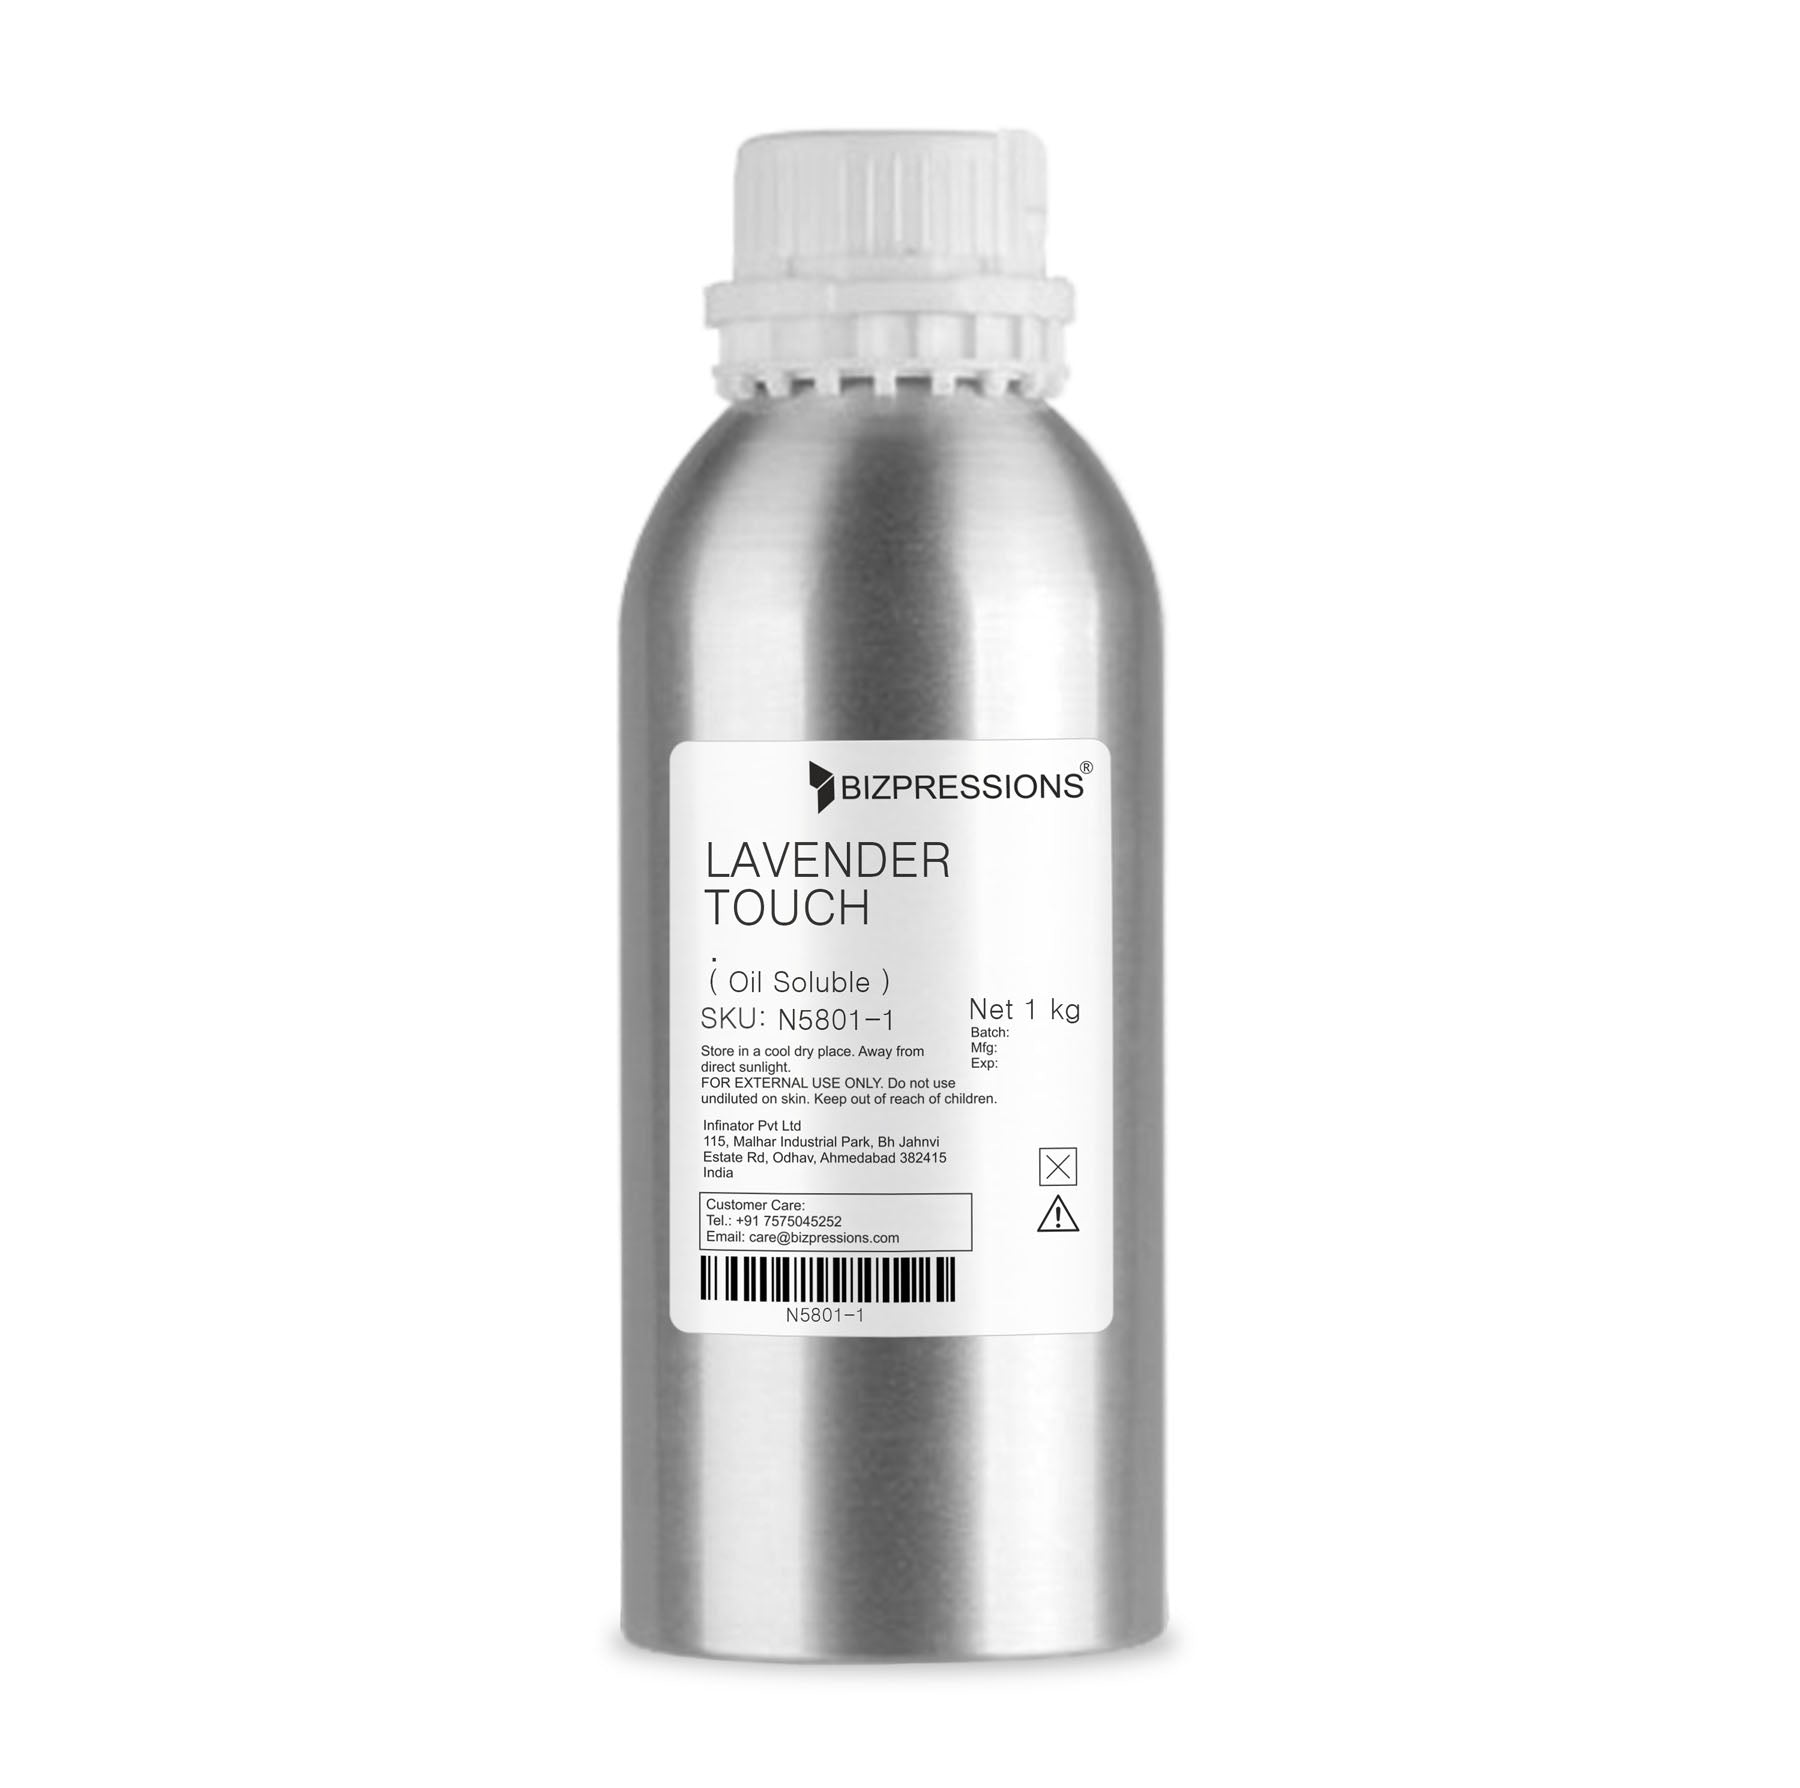 LAVENDER TOUCH - Fragrance ( Oil Soluble ) - 1 kg